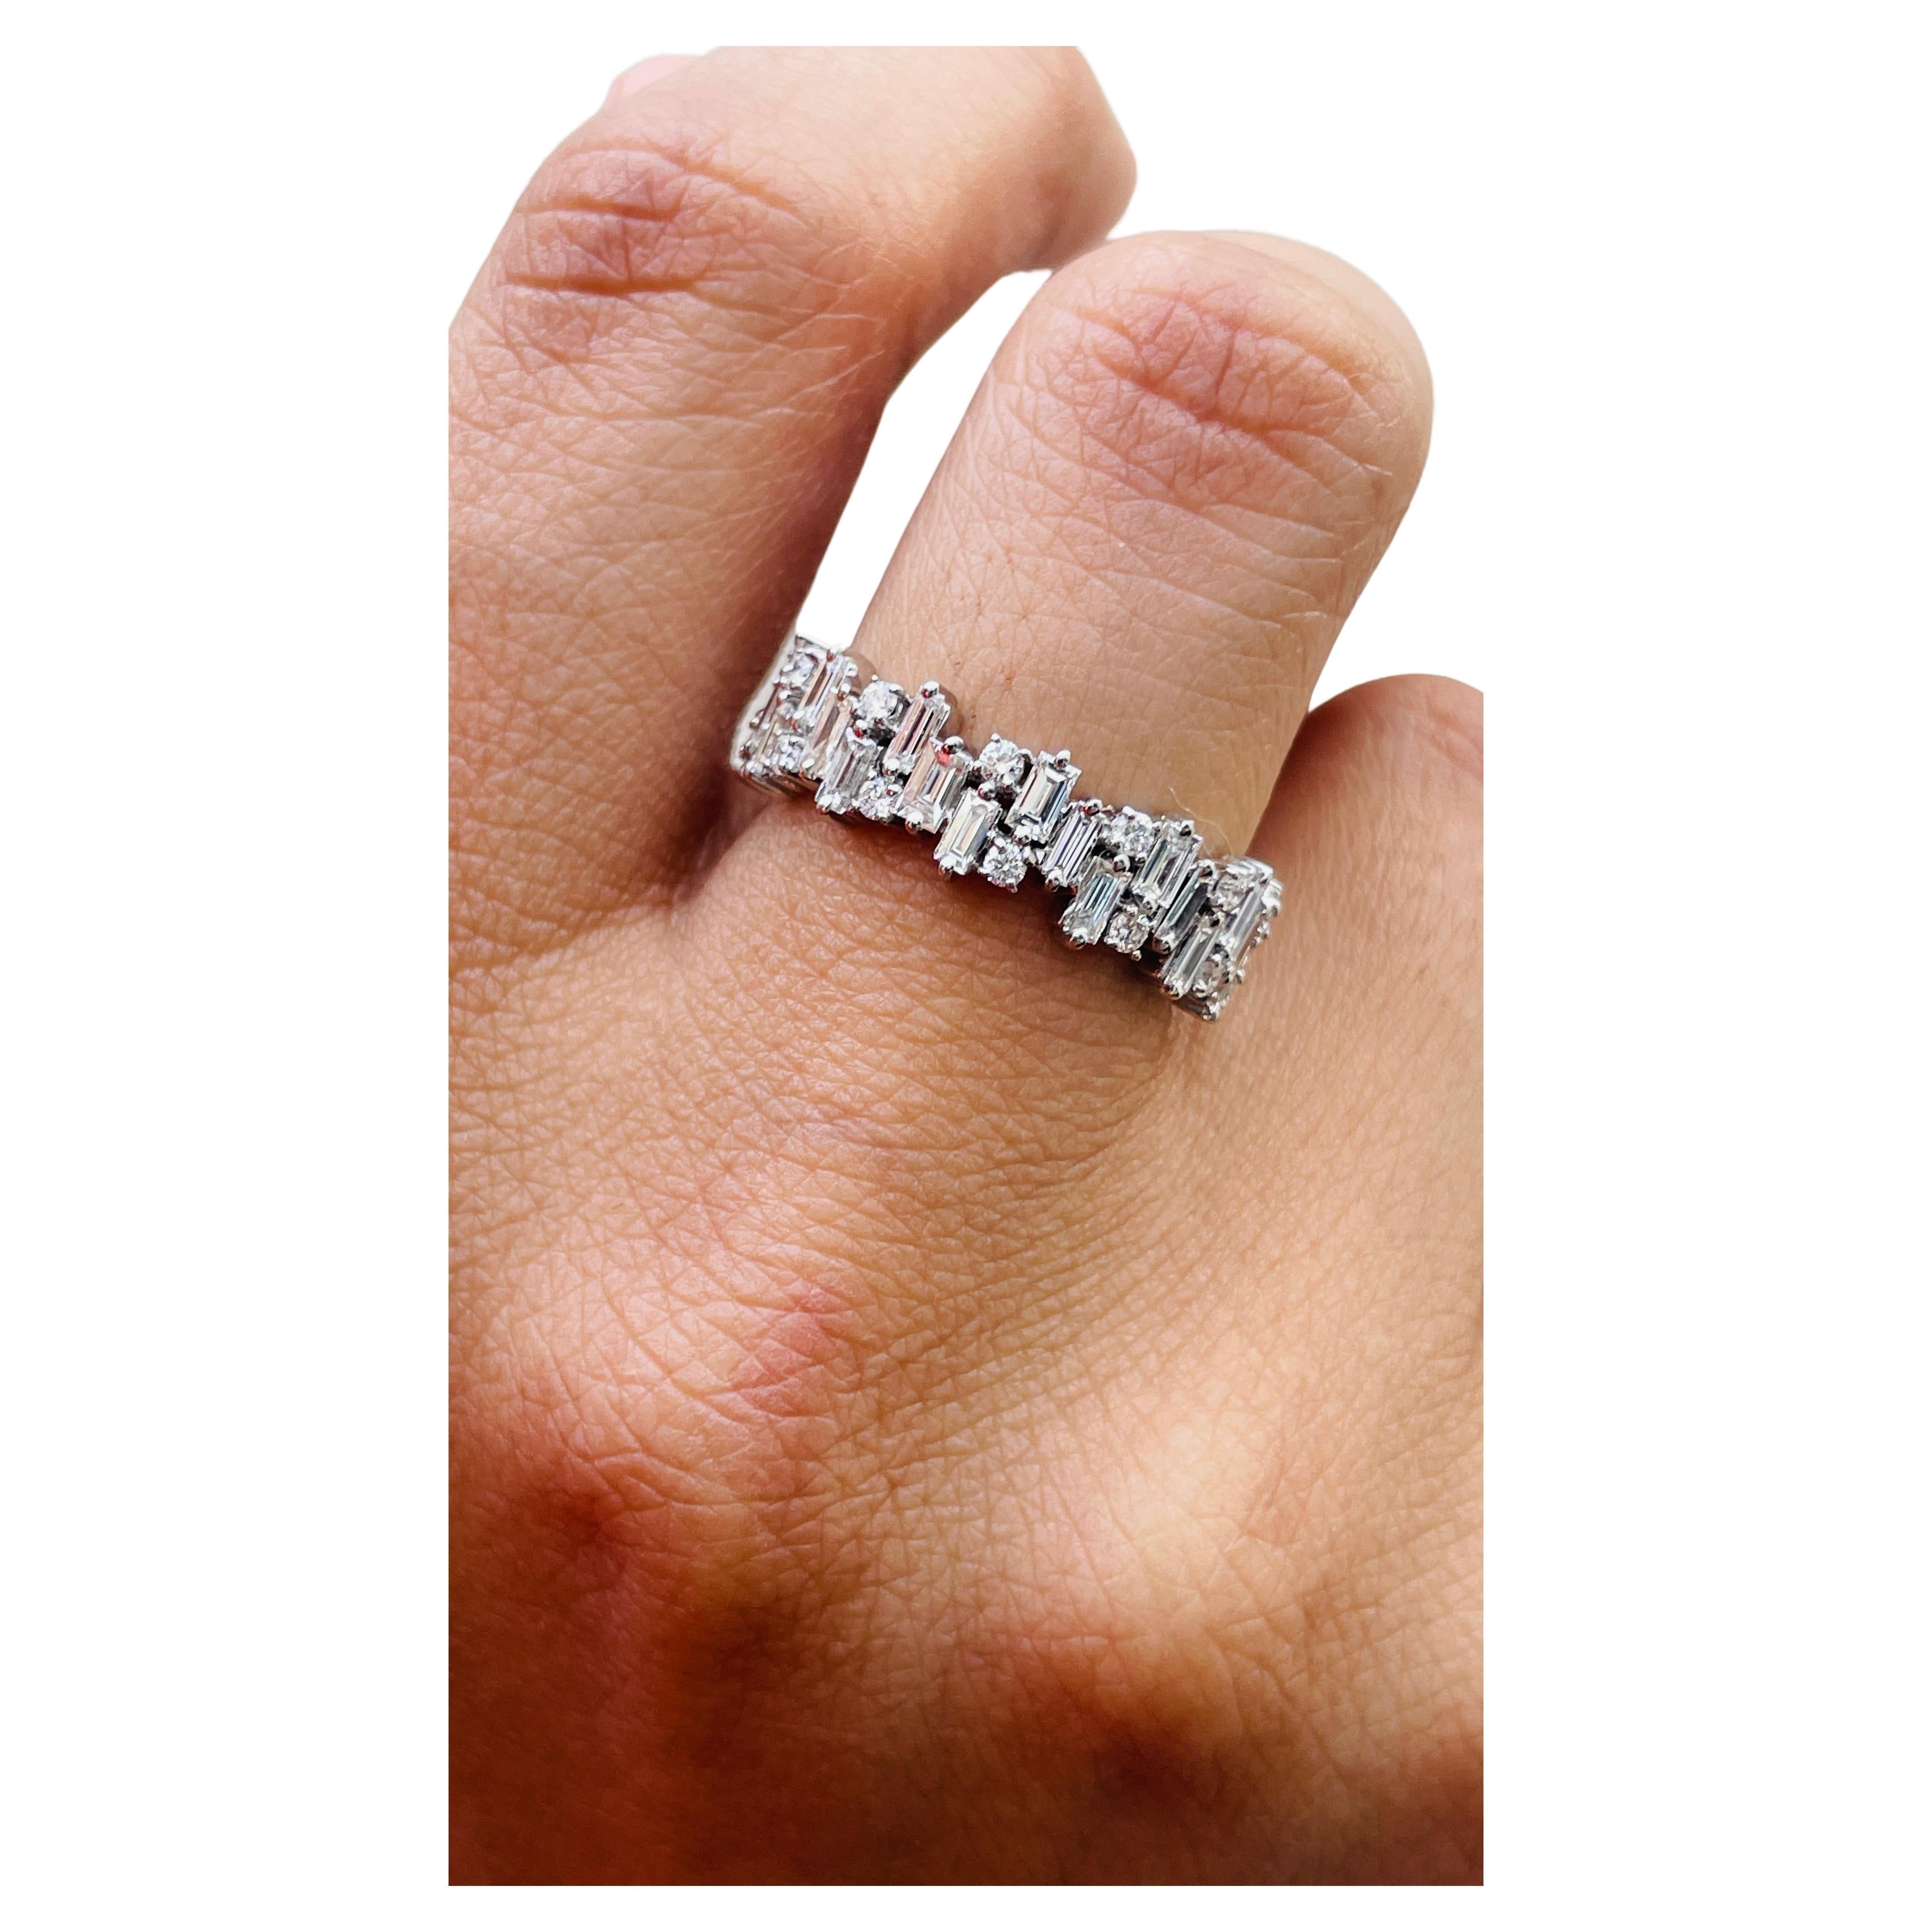 1.01 Carat Diamond Engagement Band Ring for Women in 14K White Gold